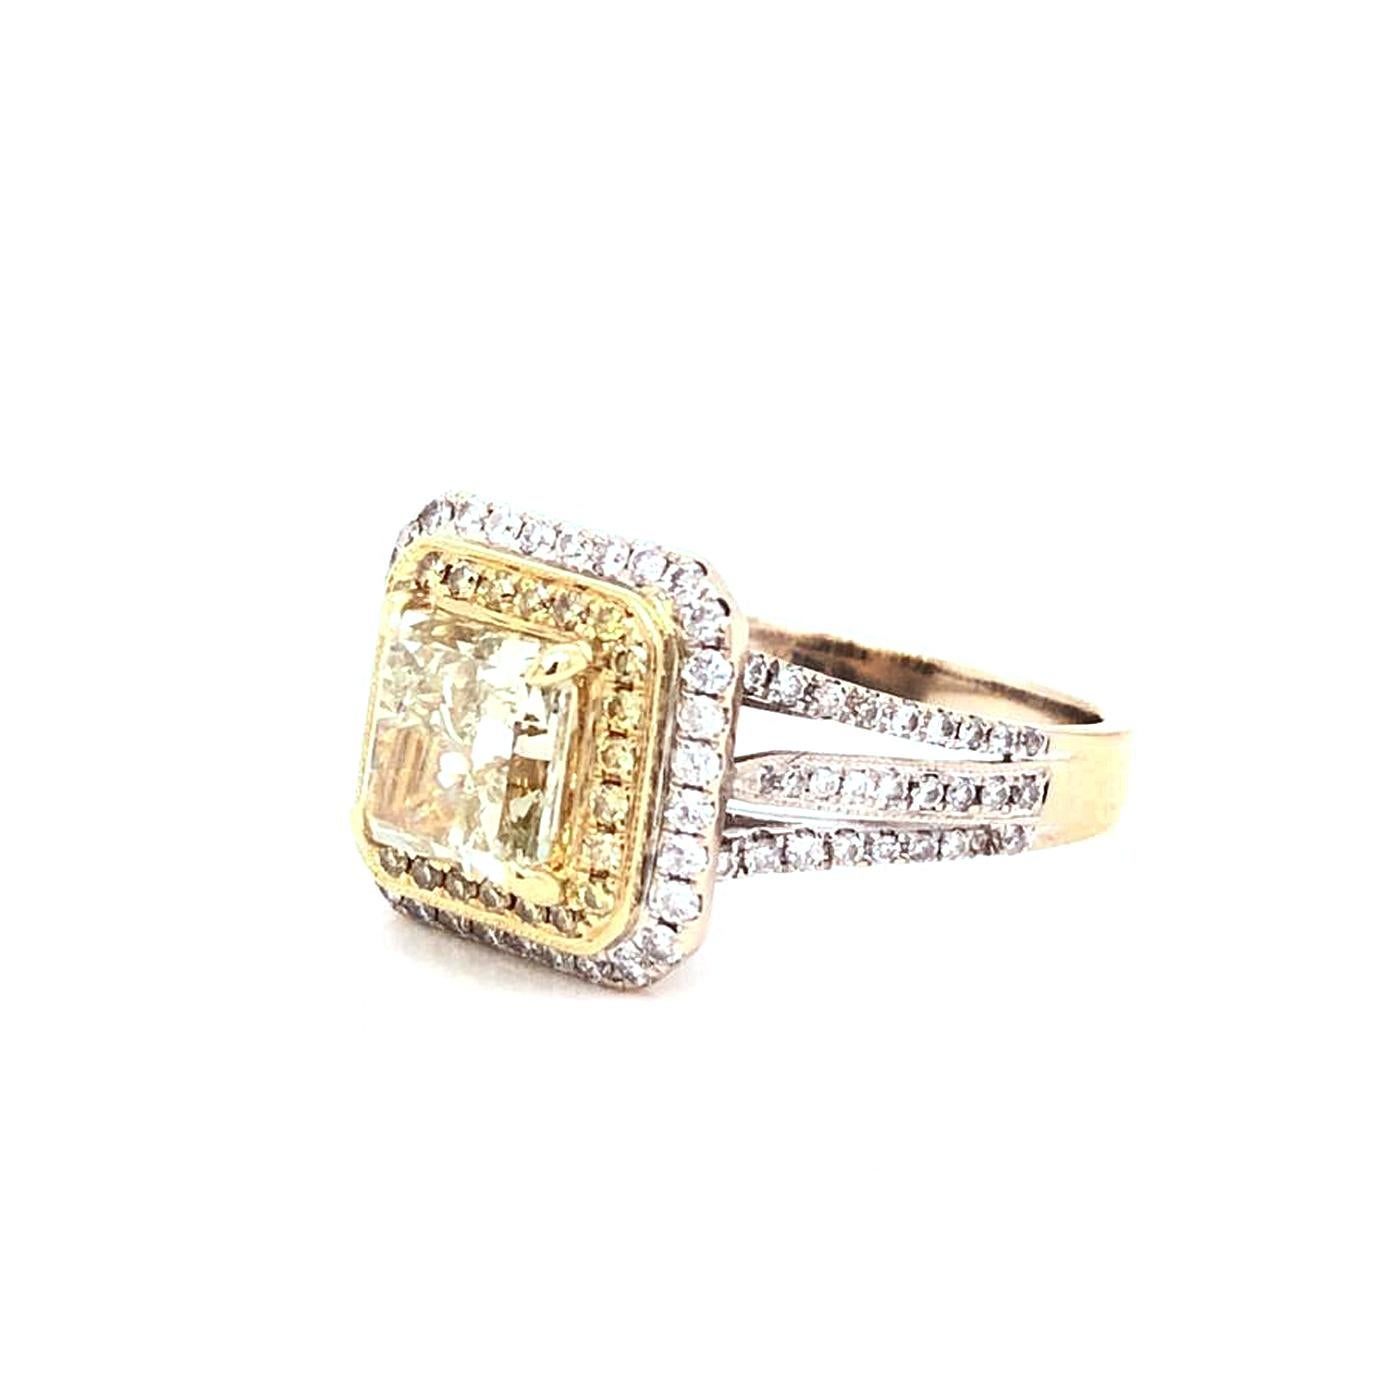 Modernist 2.02 Carat Radian Cut Fancy Yellow Diamond Ring with White Diamond Side Stones